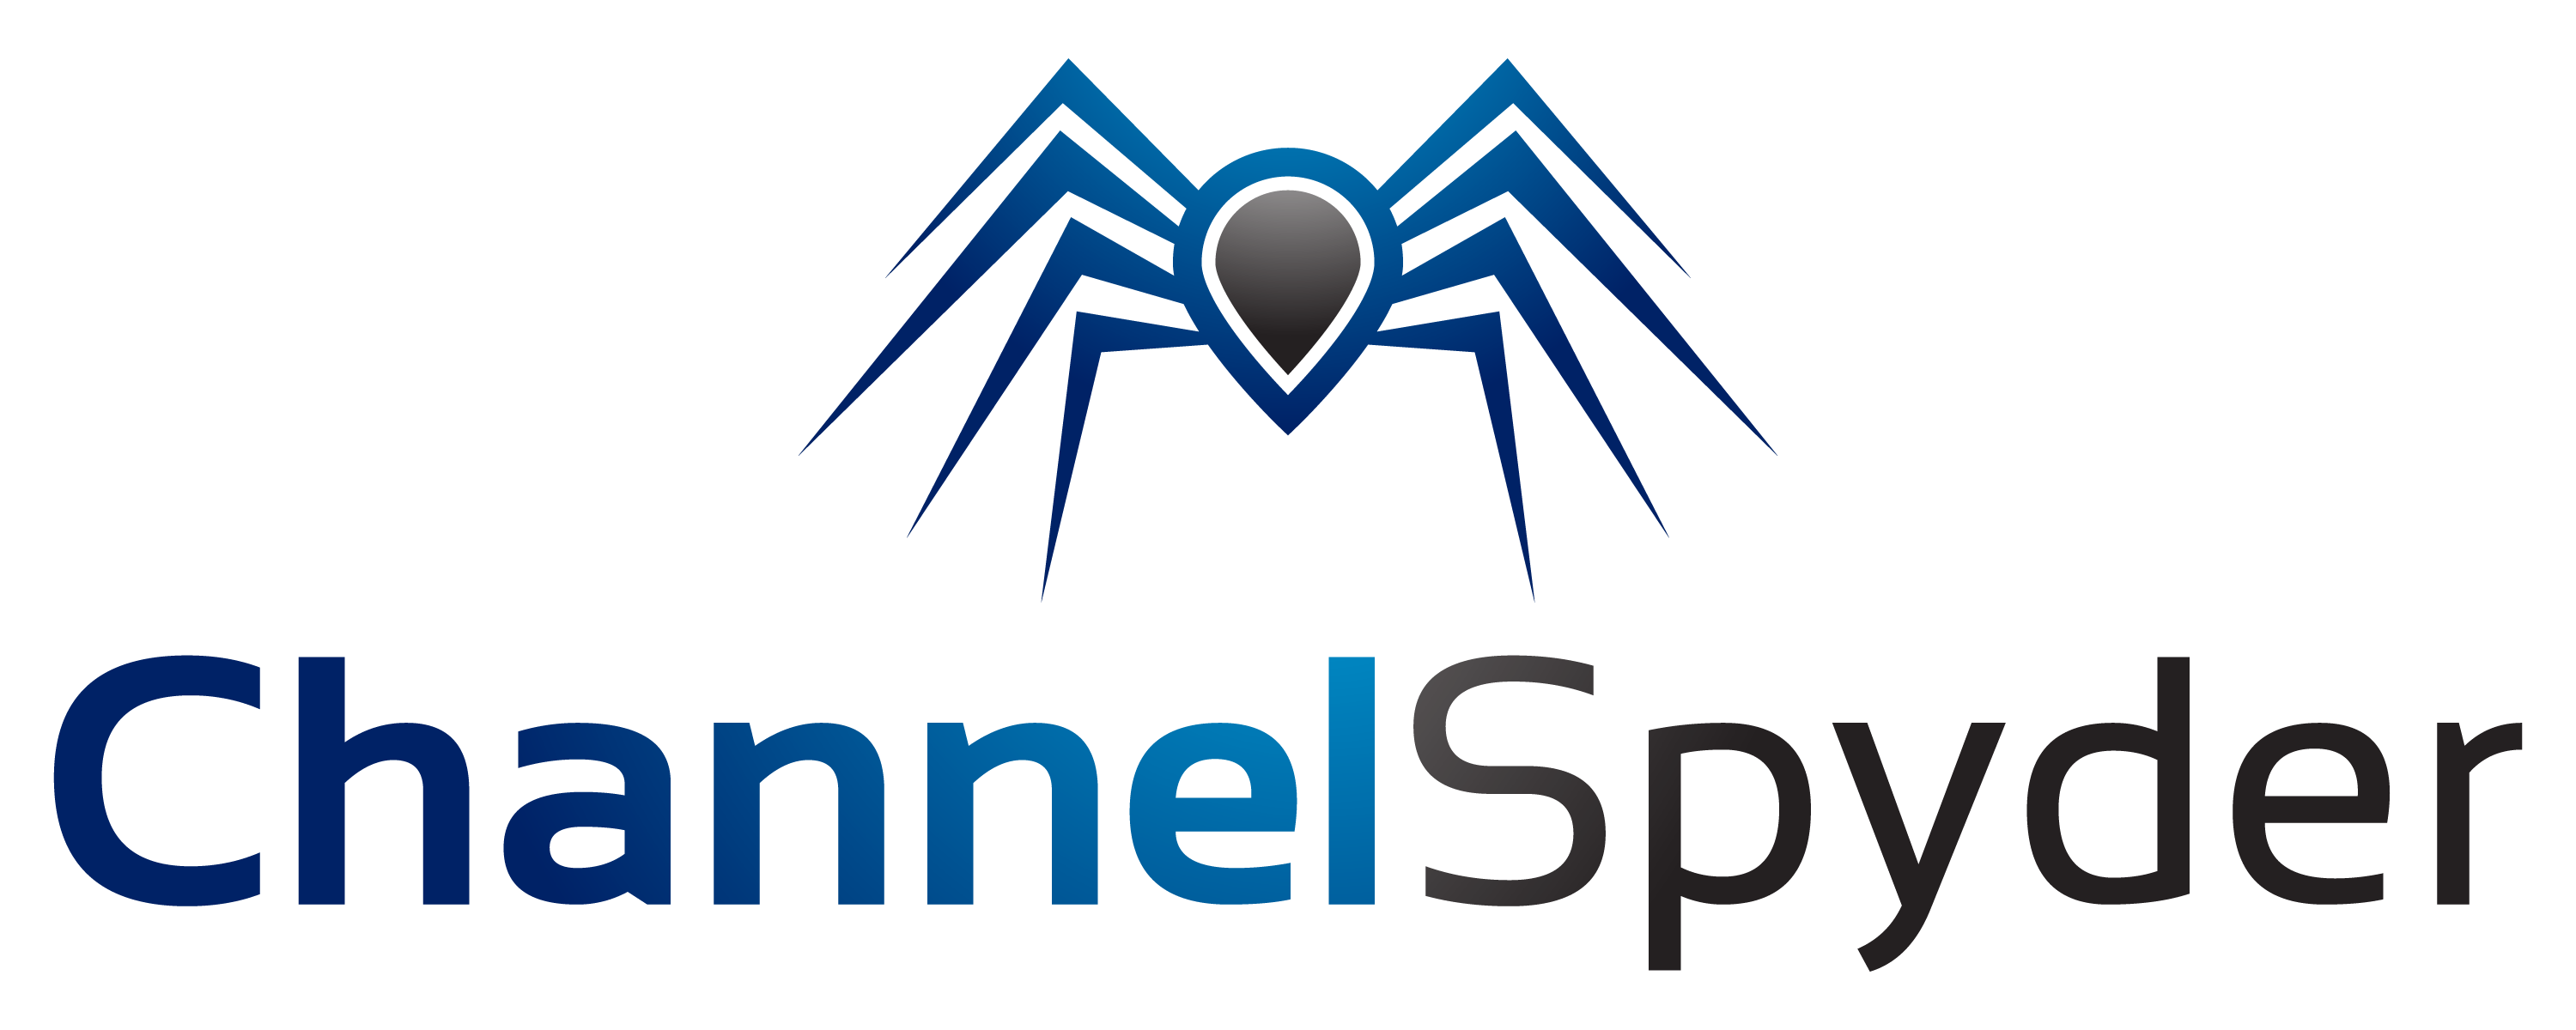 channel spyder logo